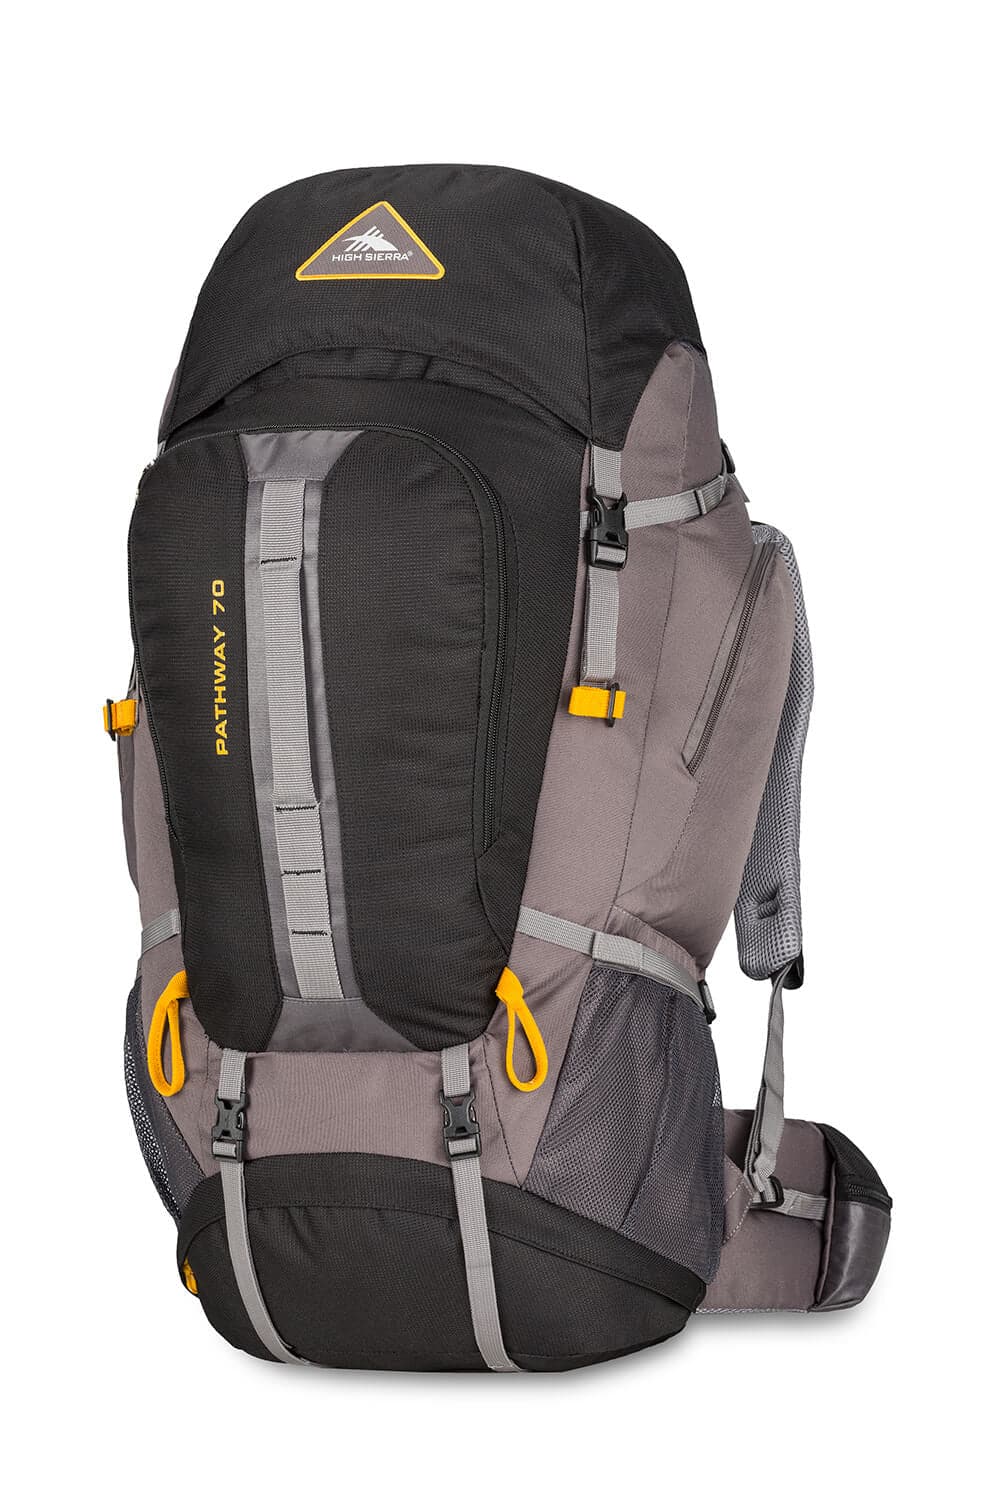 High Sierra Pathway Frame Packs 70L Backpack